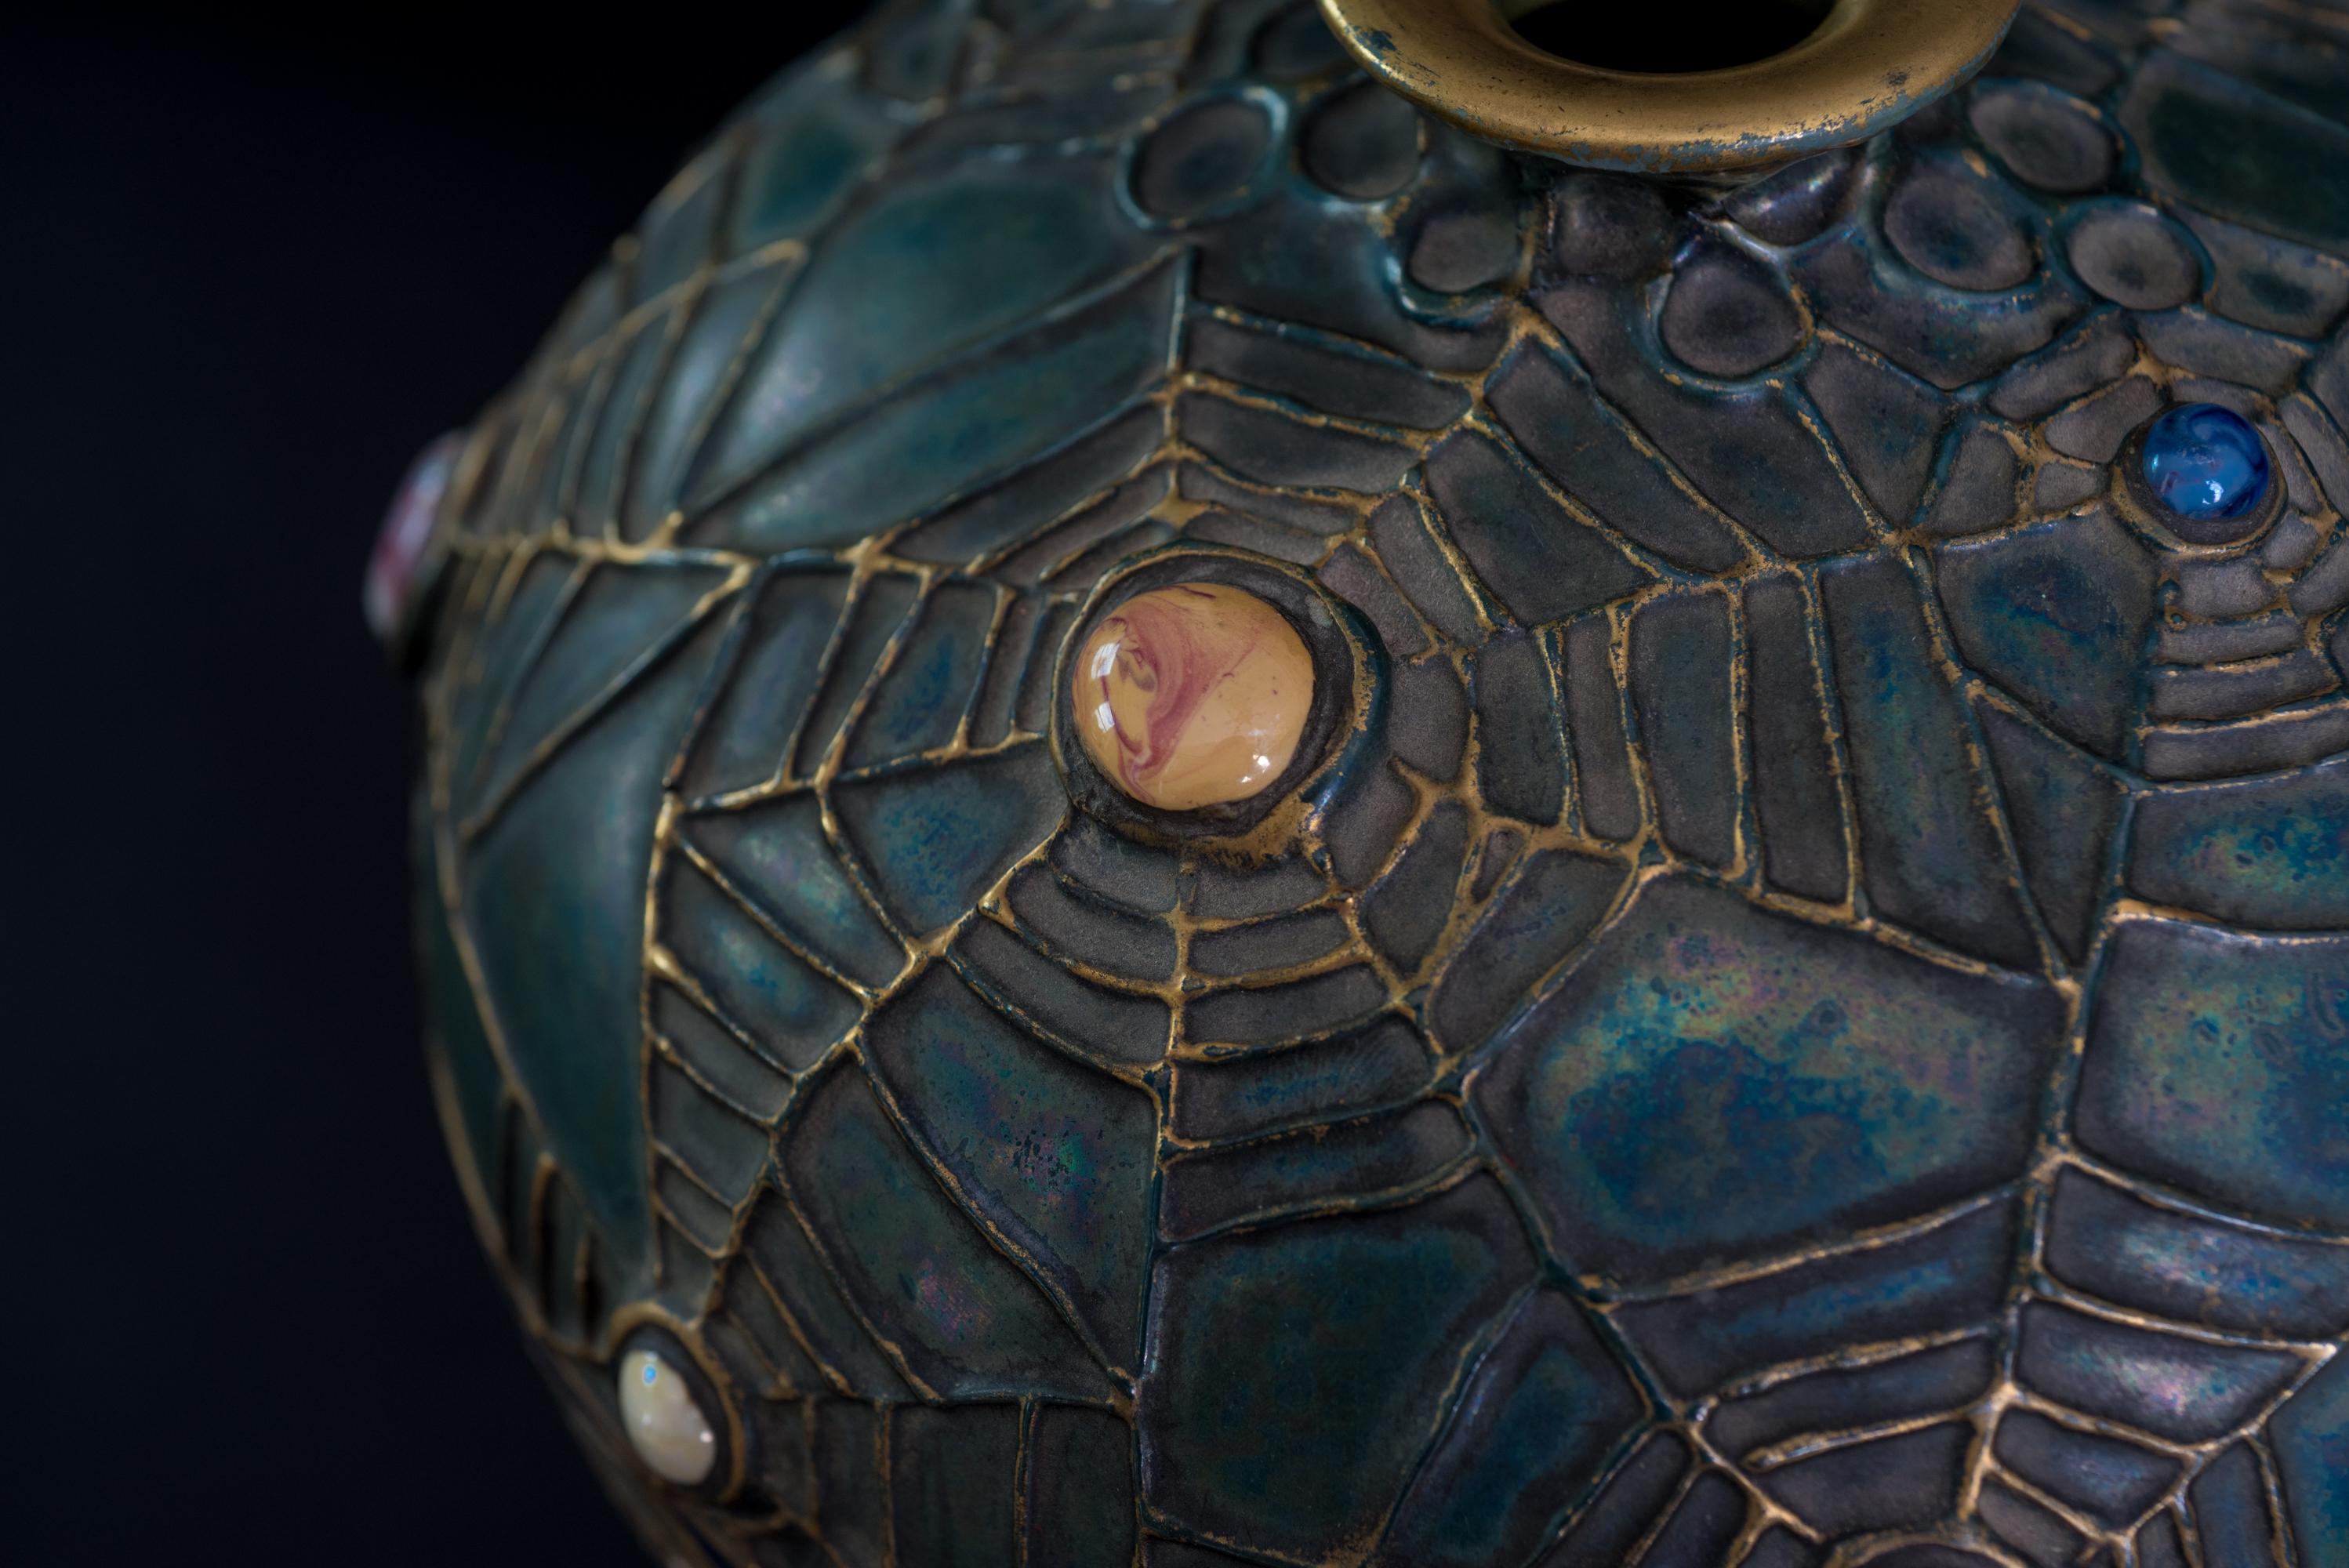 Art Nouveau Gres Bijou Butterfly & Spiderweb Semiramis Vase by RStK Amphora 1